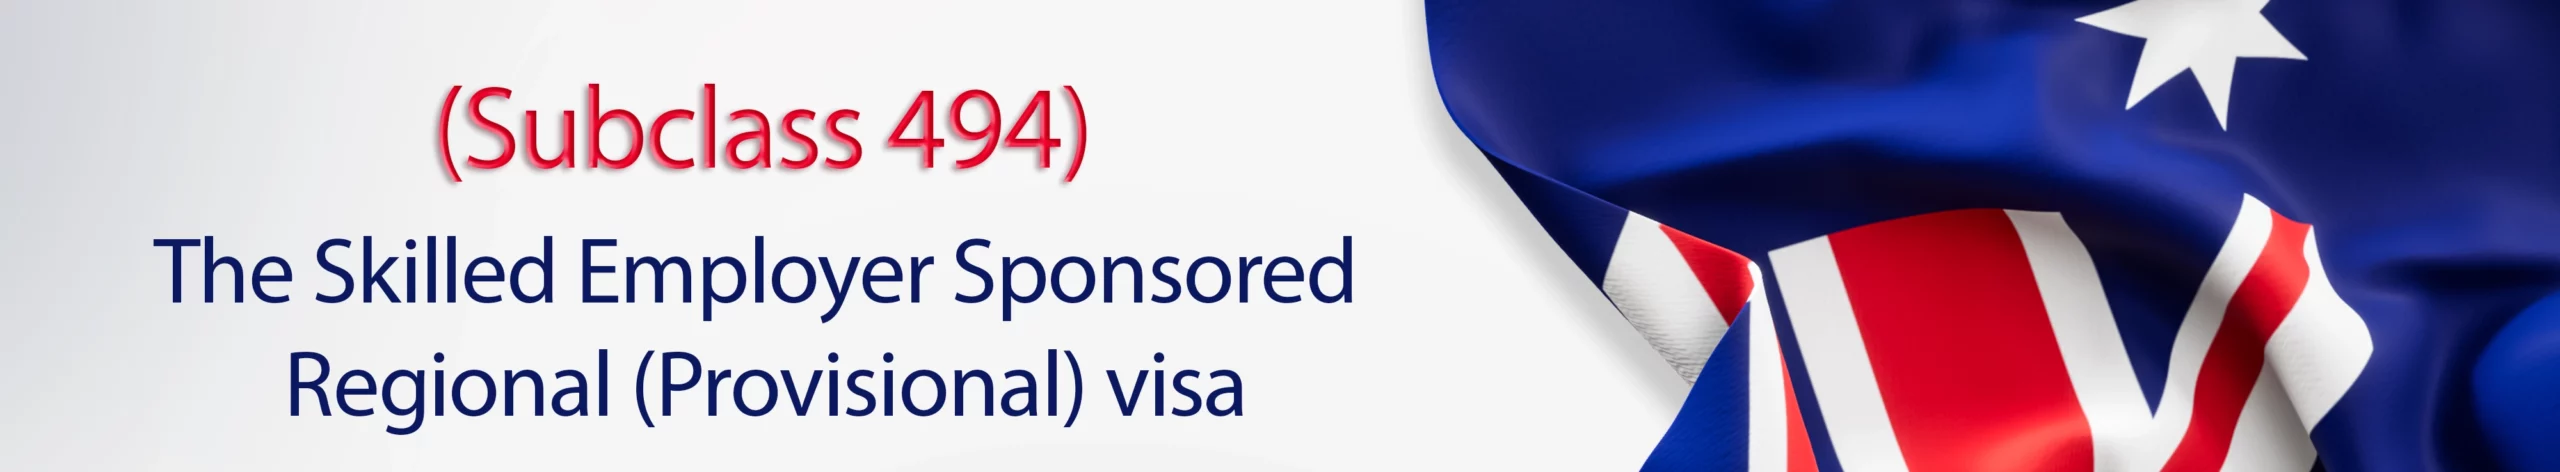 The Skilled Employer Sponsored Regional (Provisional) visa (Subclass 494) banner